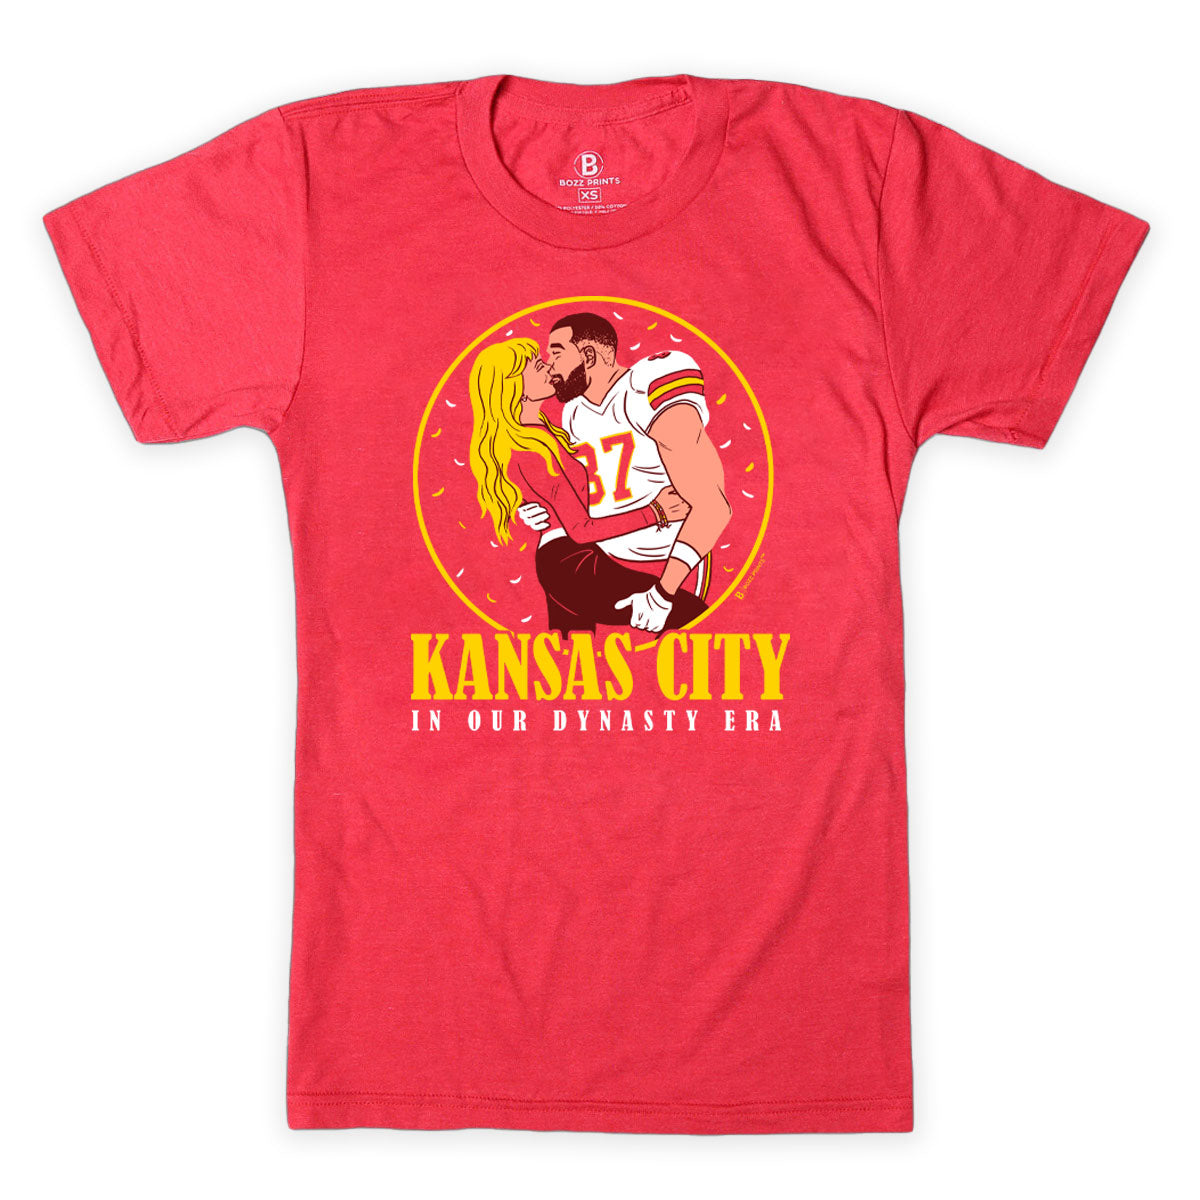 Kansas City Dynasty Era T-Shirt